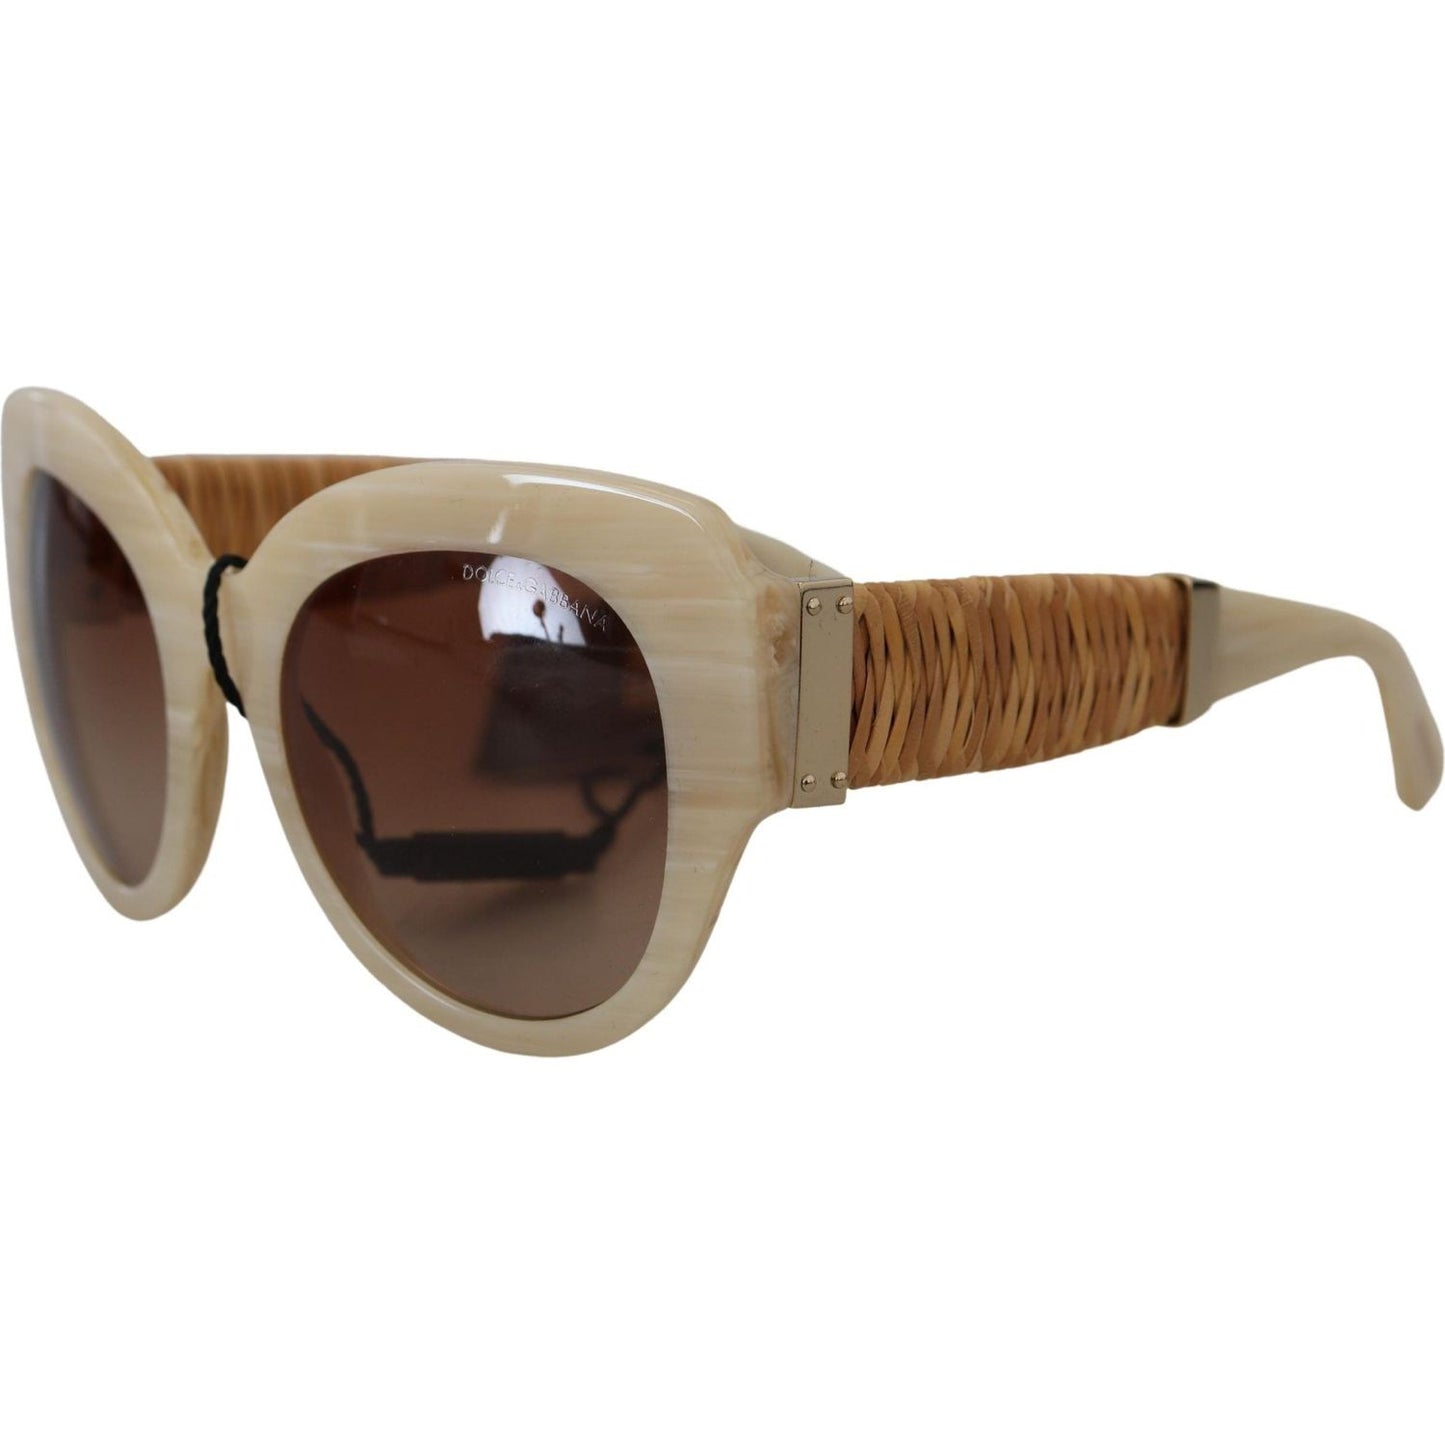 Dolce & Gabbana Beige Chic Acetate Women's Sunglasses beige-acetate-full-rim-brown-lense-dg4294-sunglasses IMG_4308-1-scaled-37c891c4-763.jpg